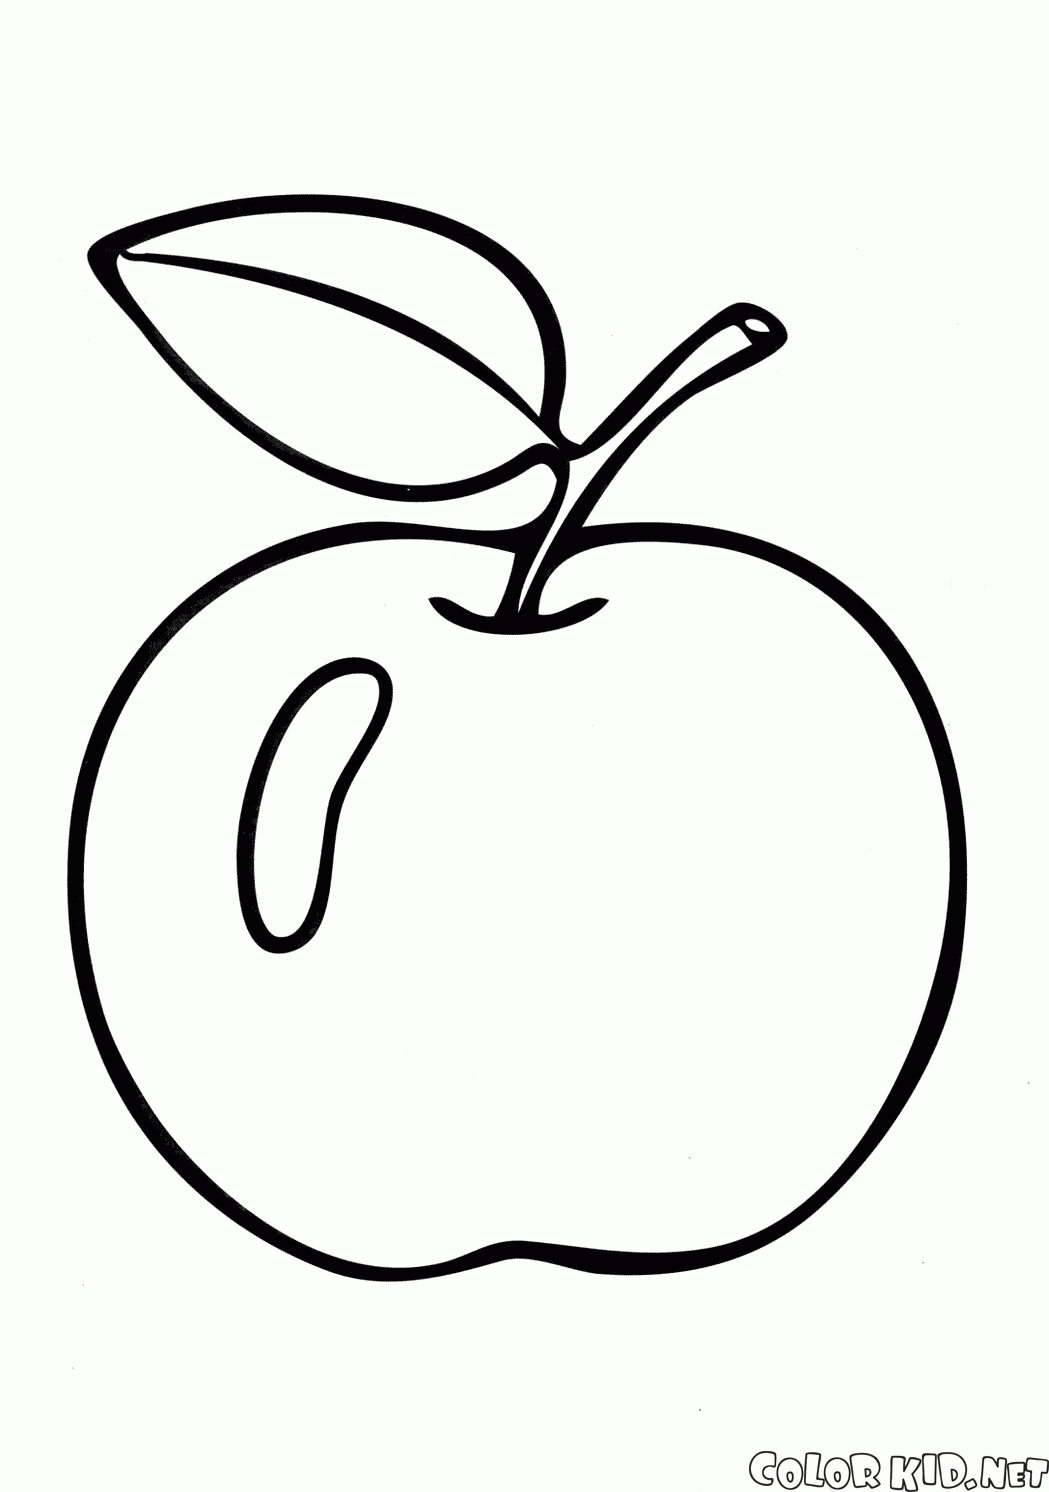 رسم كرتوني تفاحة تلوين - لبس رسمي